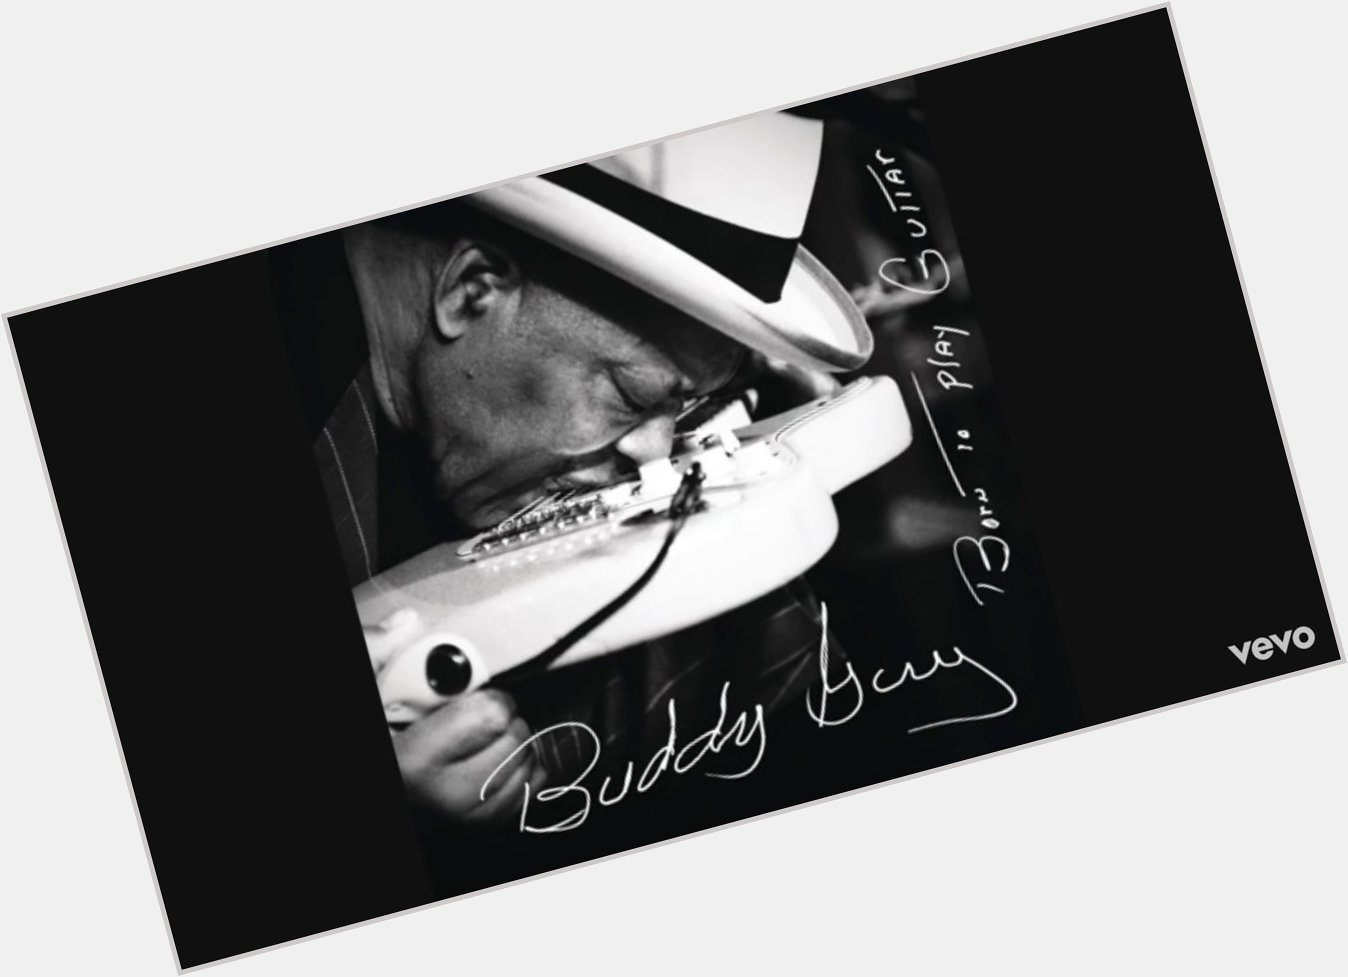 Buddy Guy - Born To Play Guitar (Audio) 

 

Happy 85th Birthday to Buddy Guy! 